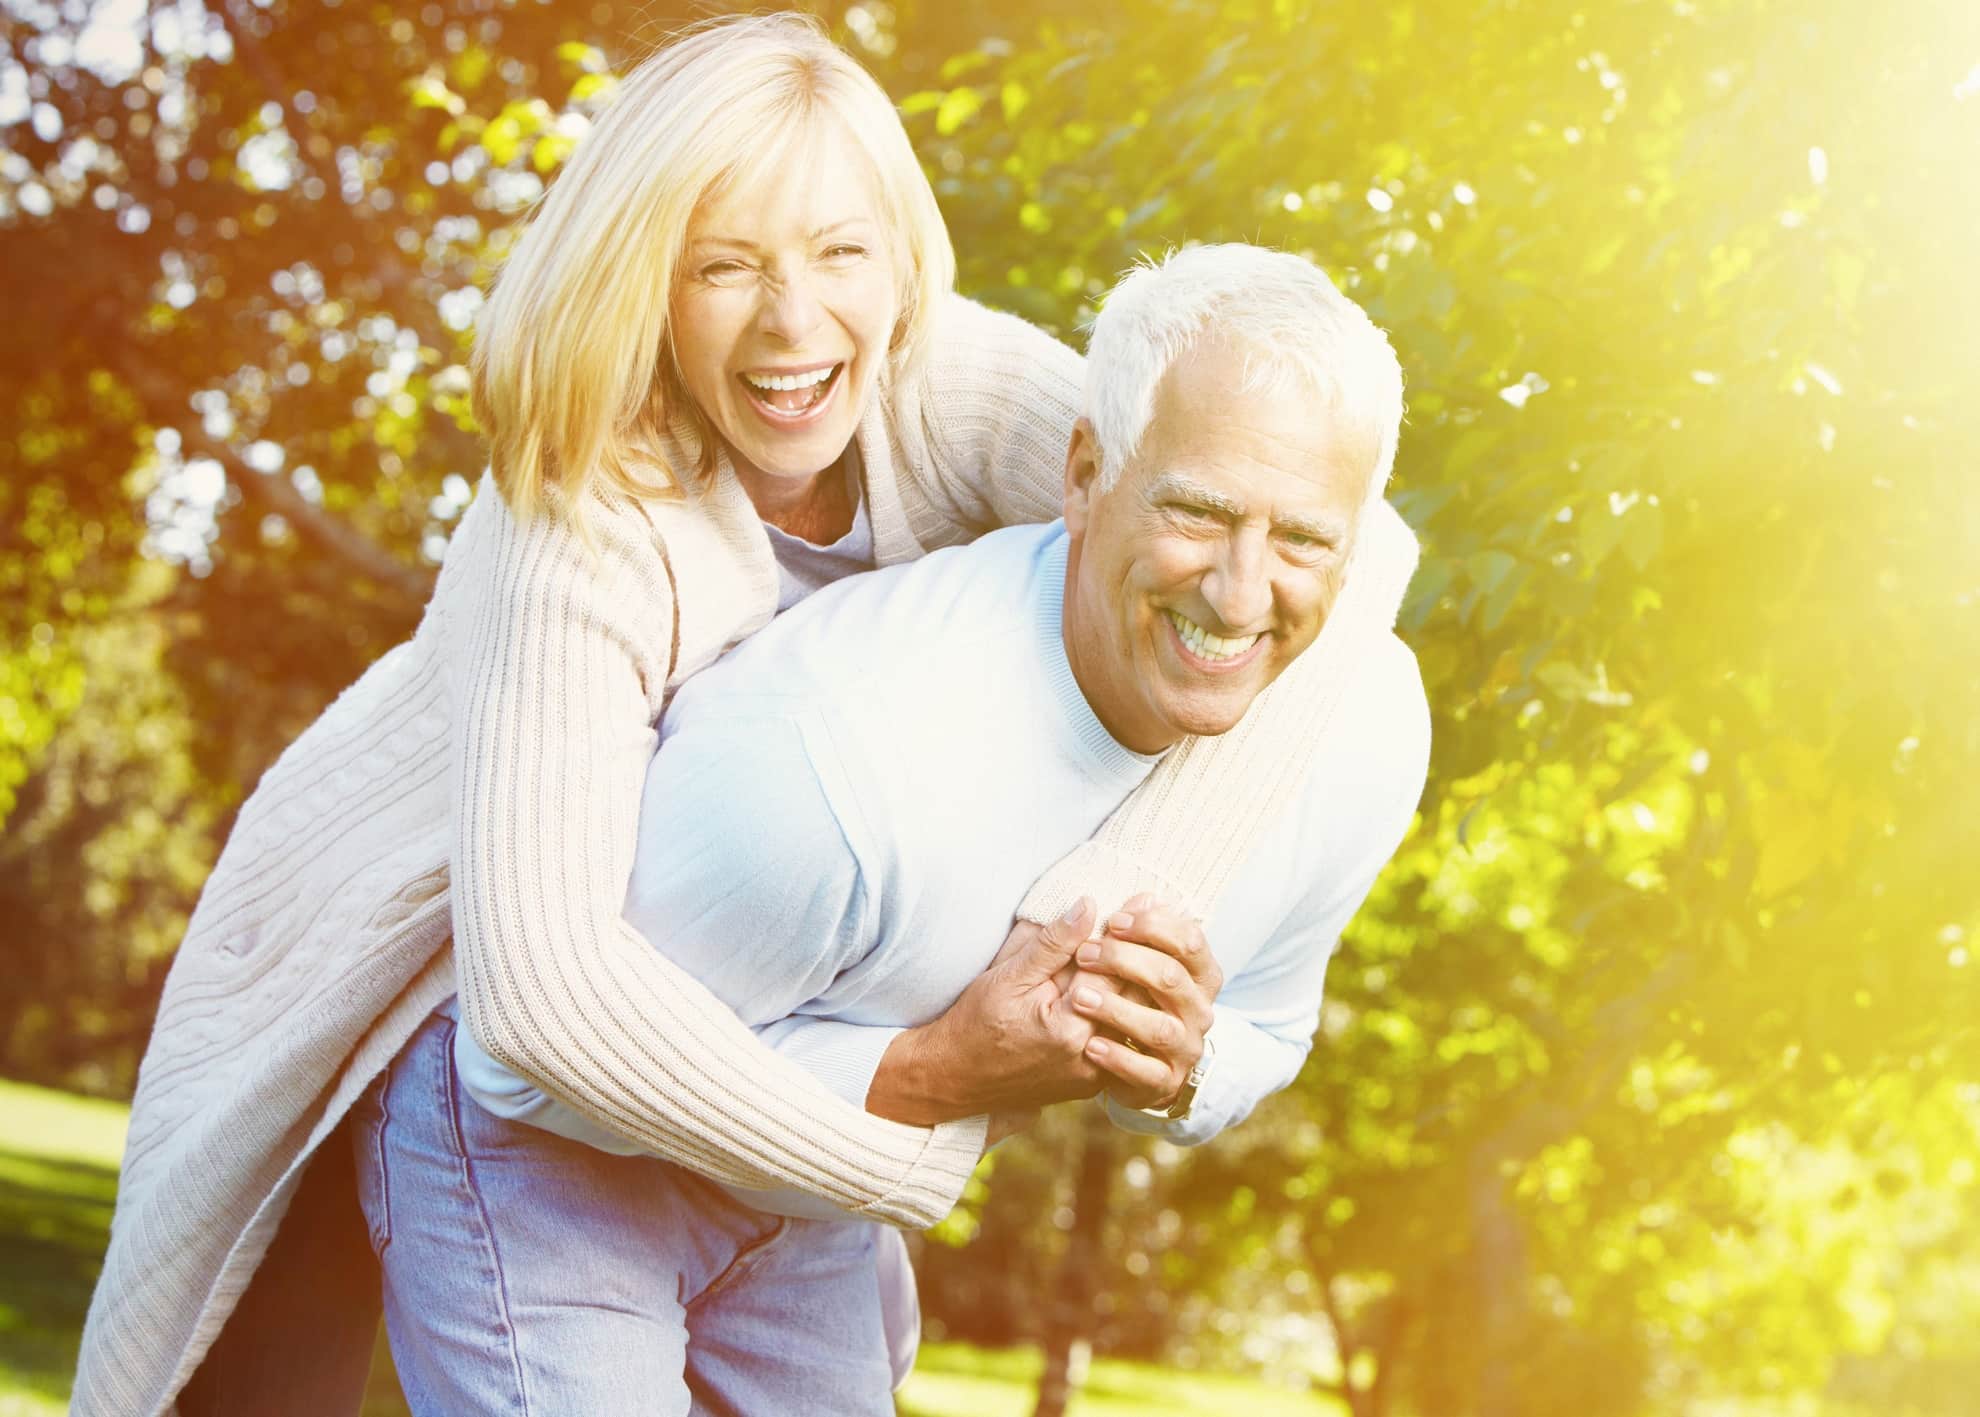 Seniors Dating Sites Free - Dating When Older - Arild Remmereit